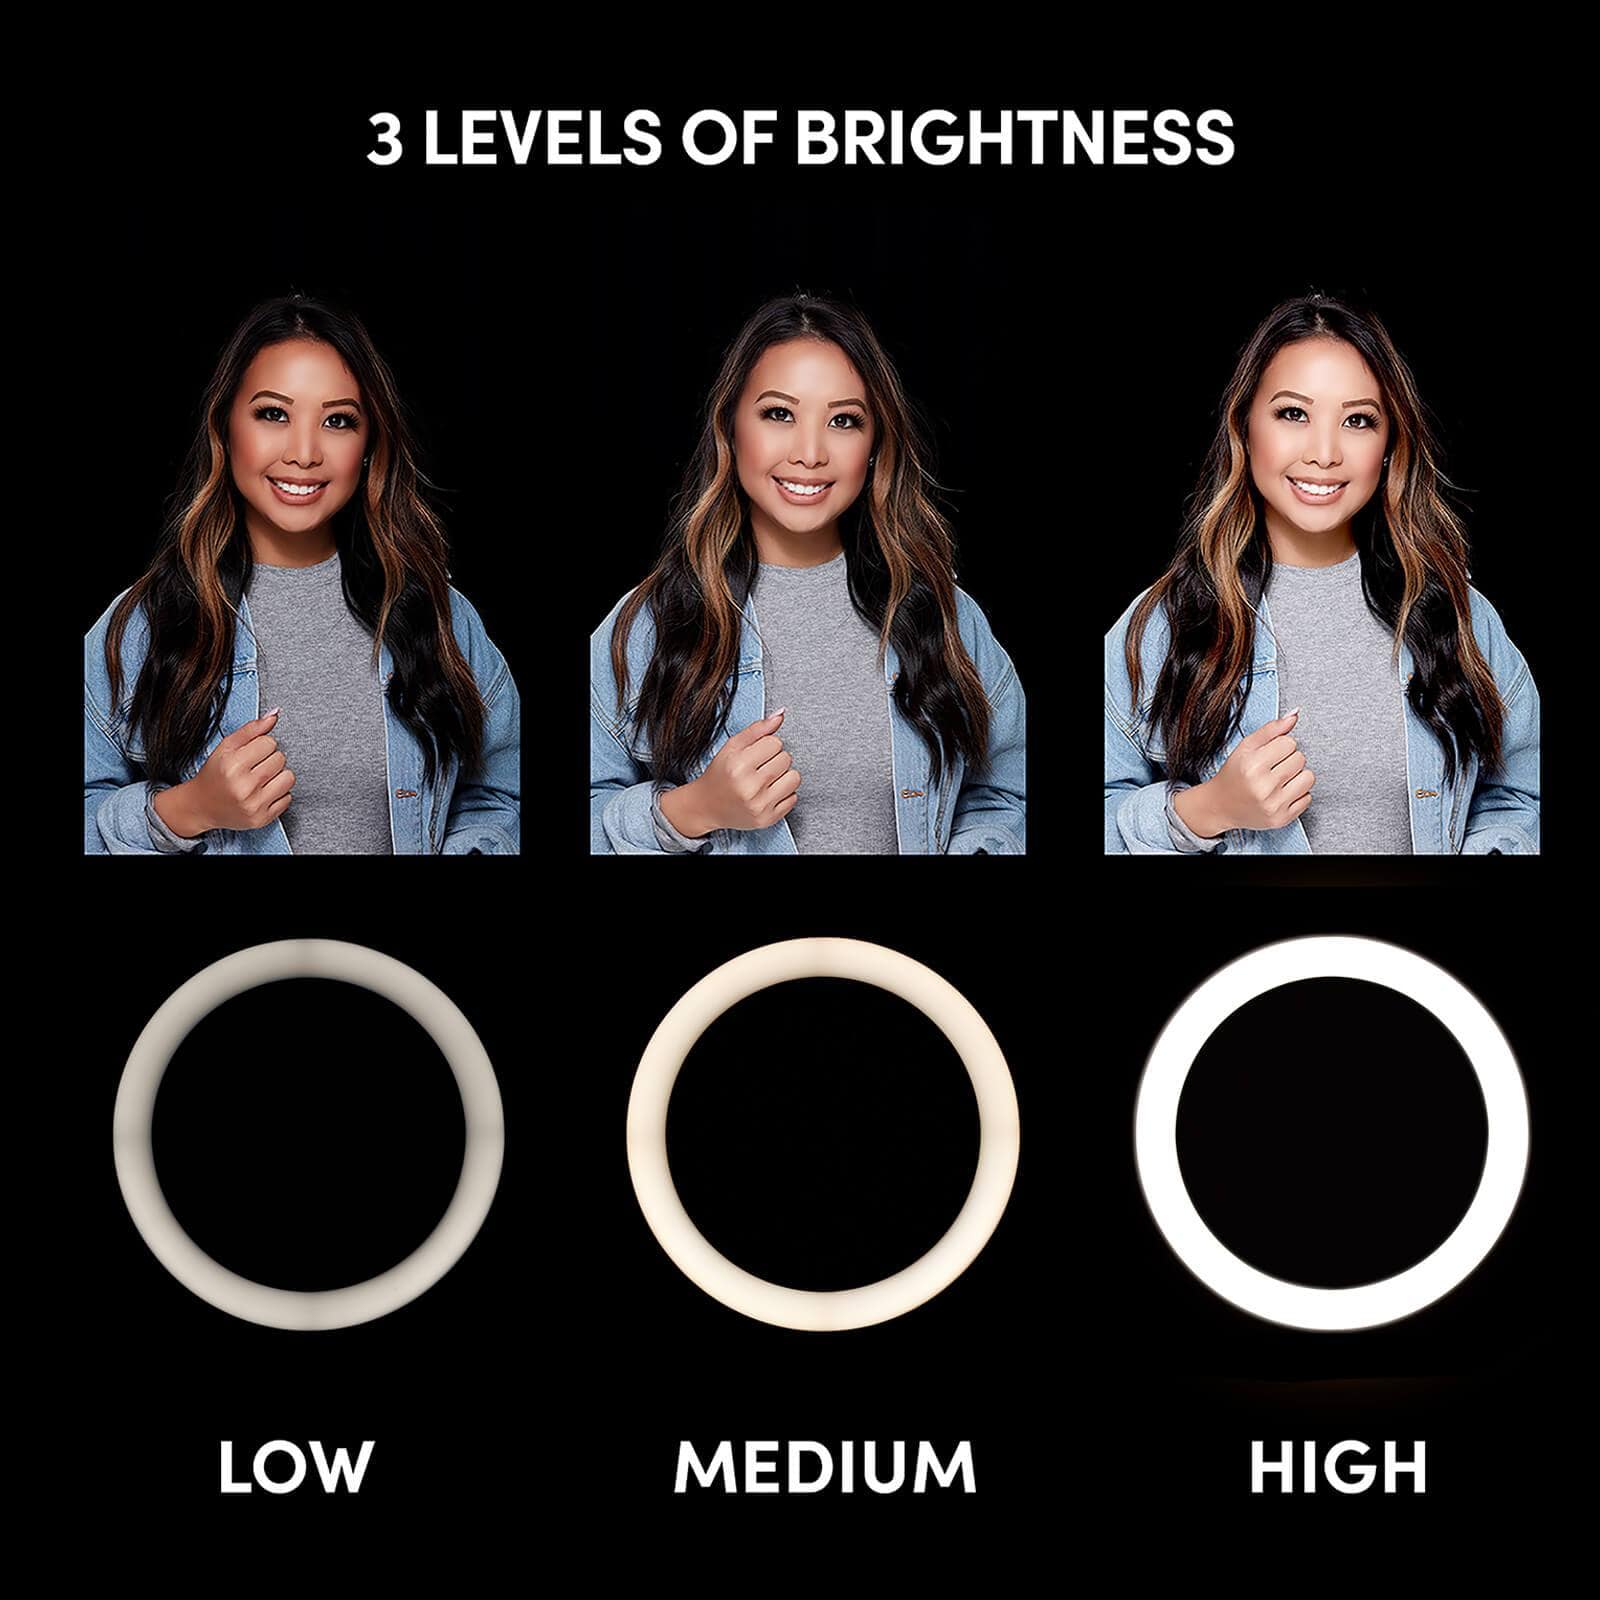 Three levels of brightness are low, medium and high